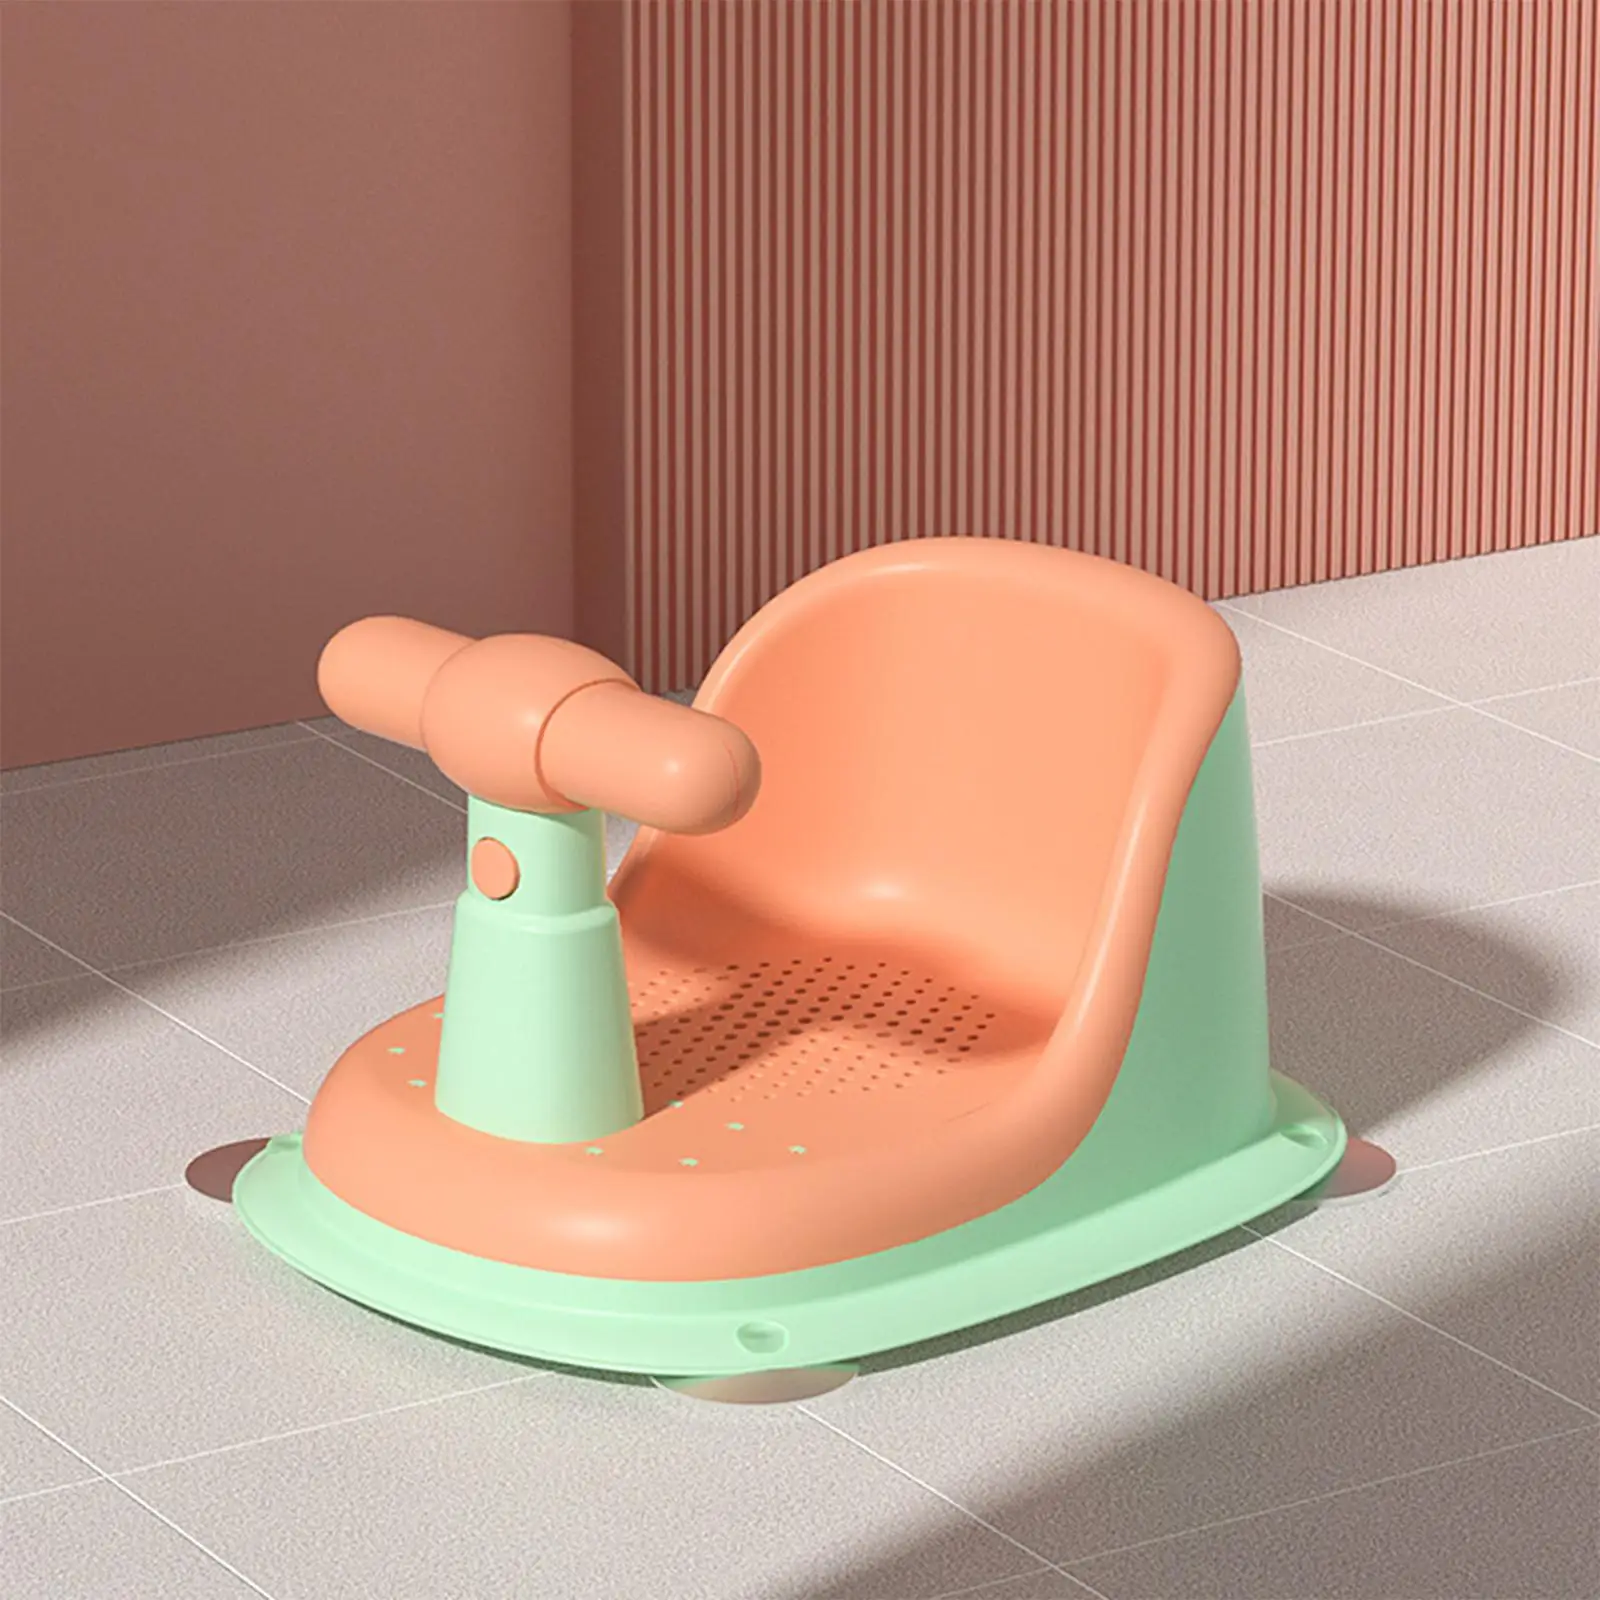 Bathroom Baby Bath Tub Seat Bath Tub Seat Suction Cup Anti Slip Bath Seat Support Shower Seat for Baby Kids Girls 6-18 Months